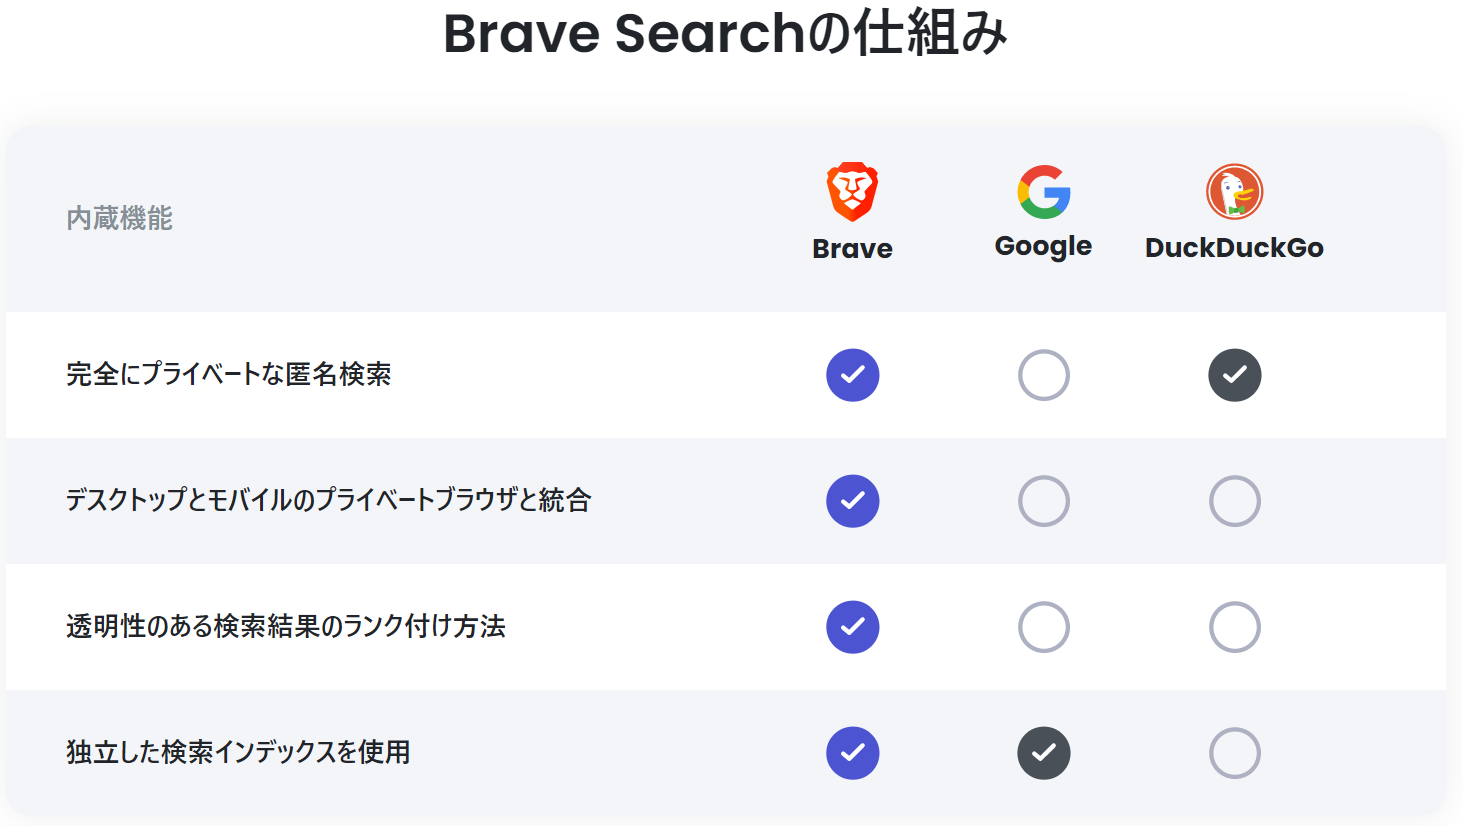 Braveブラウザとは_BraveSearchの仕組み